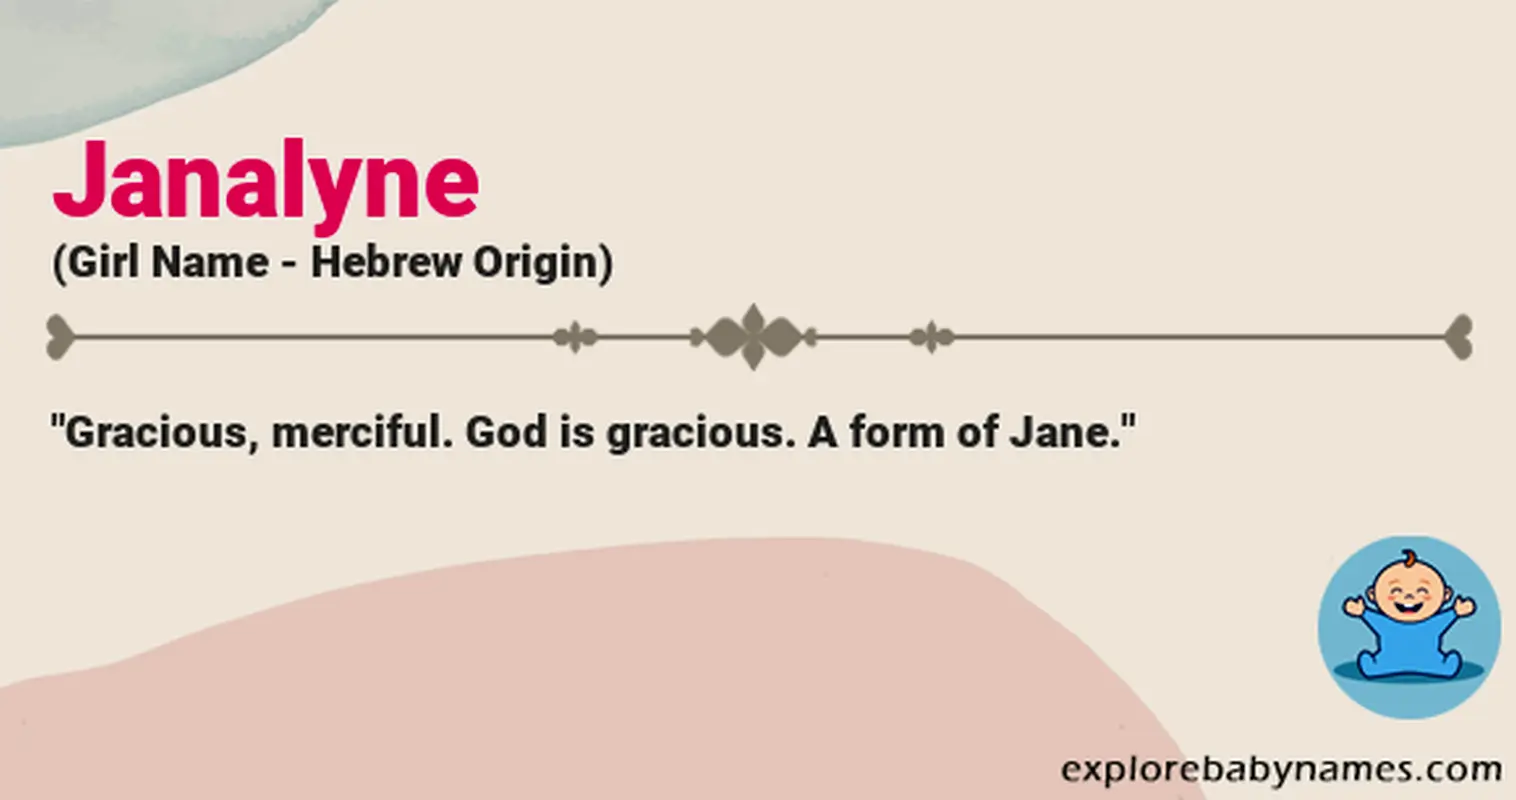 Meaning of Janalyne